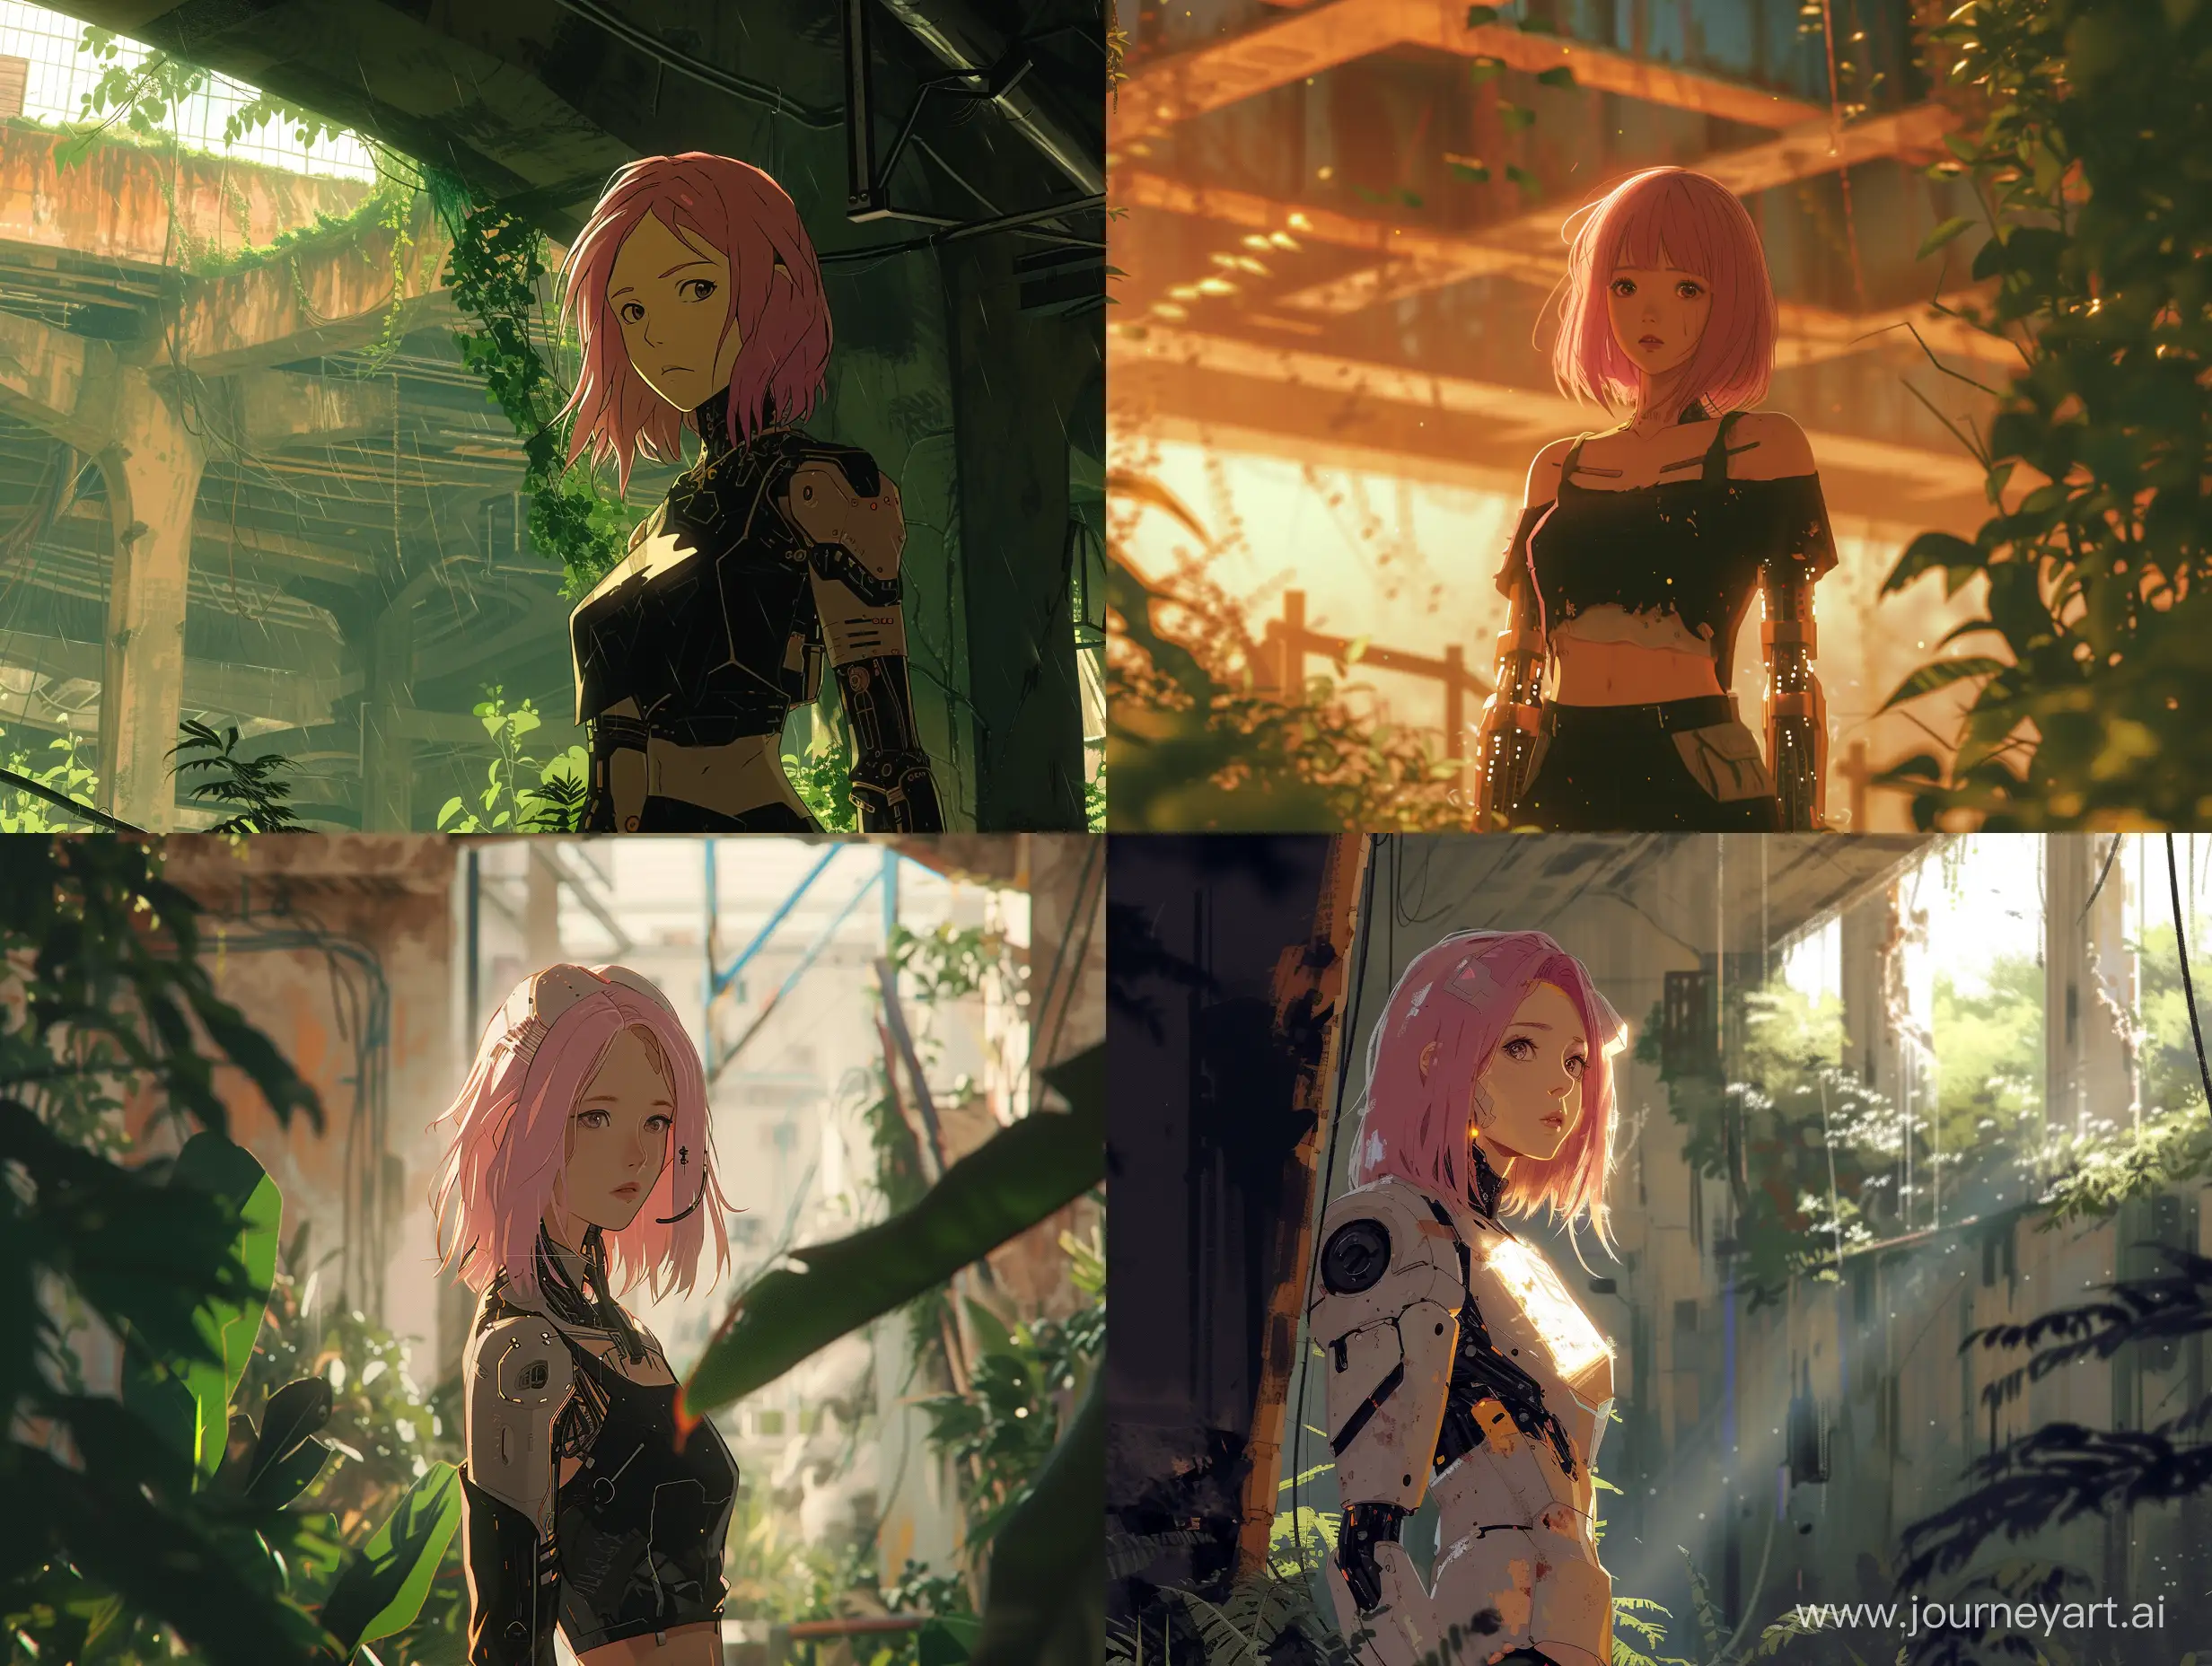 Dreamy-Cyberpunk-Anime-Detailed-4k-Still-of-a-PinkHaired-Cyborg-Woman